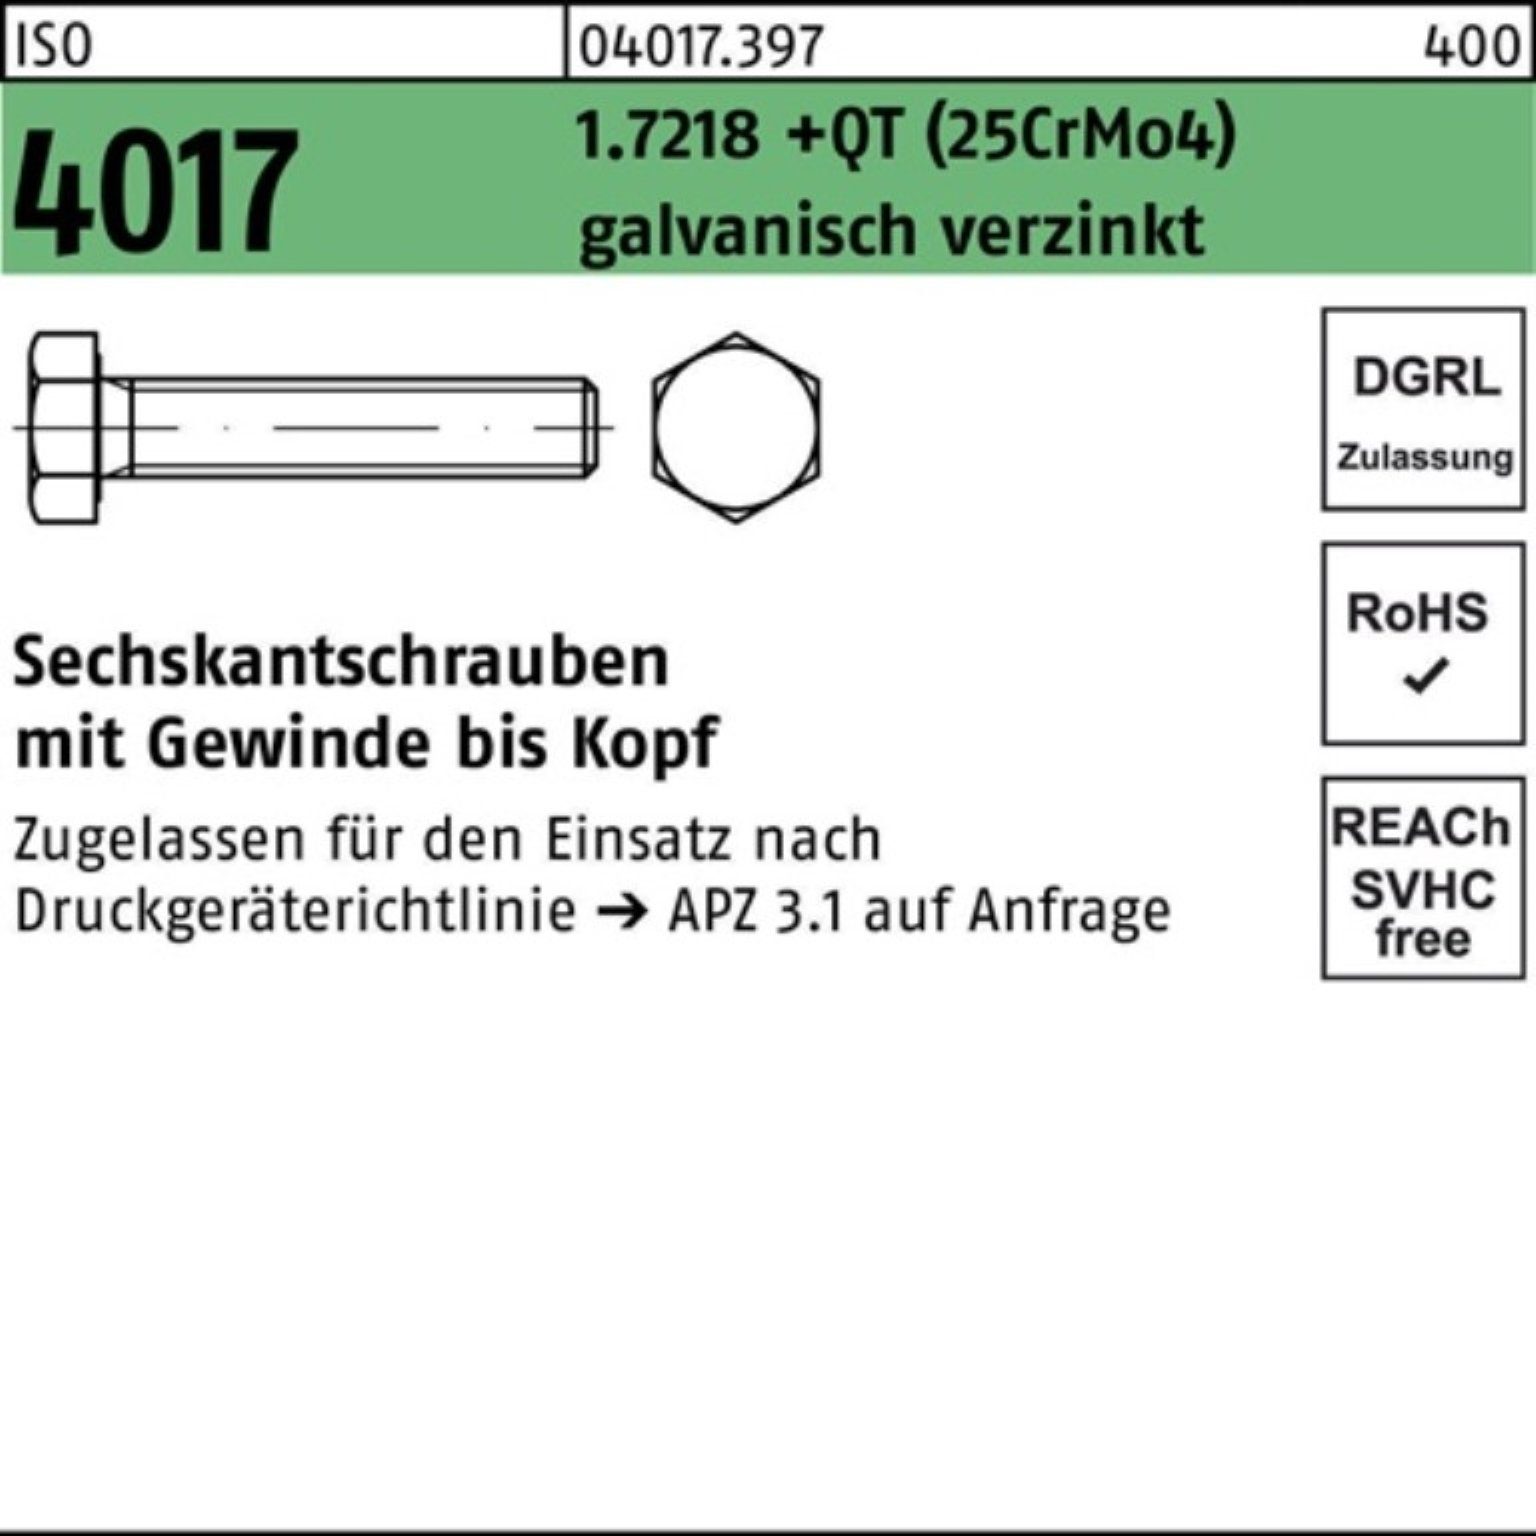 Bufab Sechskantschraube 100er Pack Sechskantschraube ISO (25CrMo4) 4017 VG M24x160 1.7218 +QT